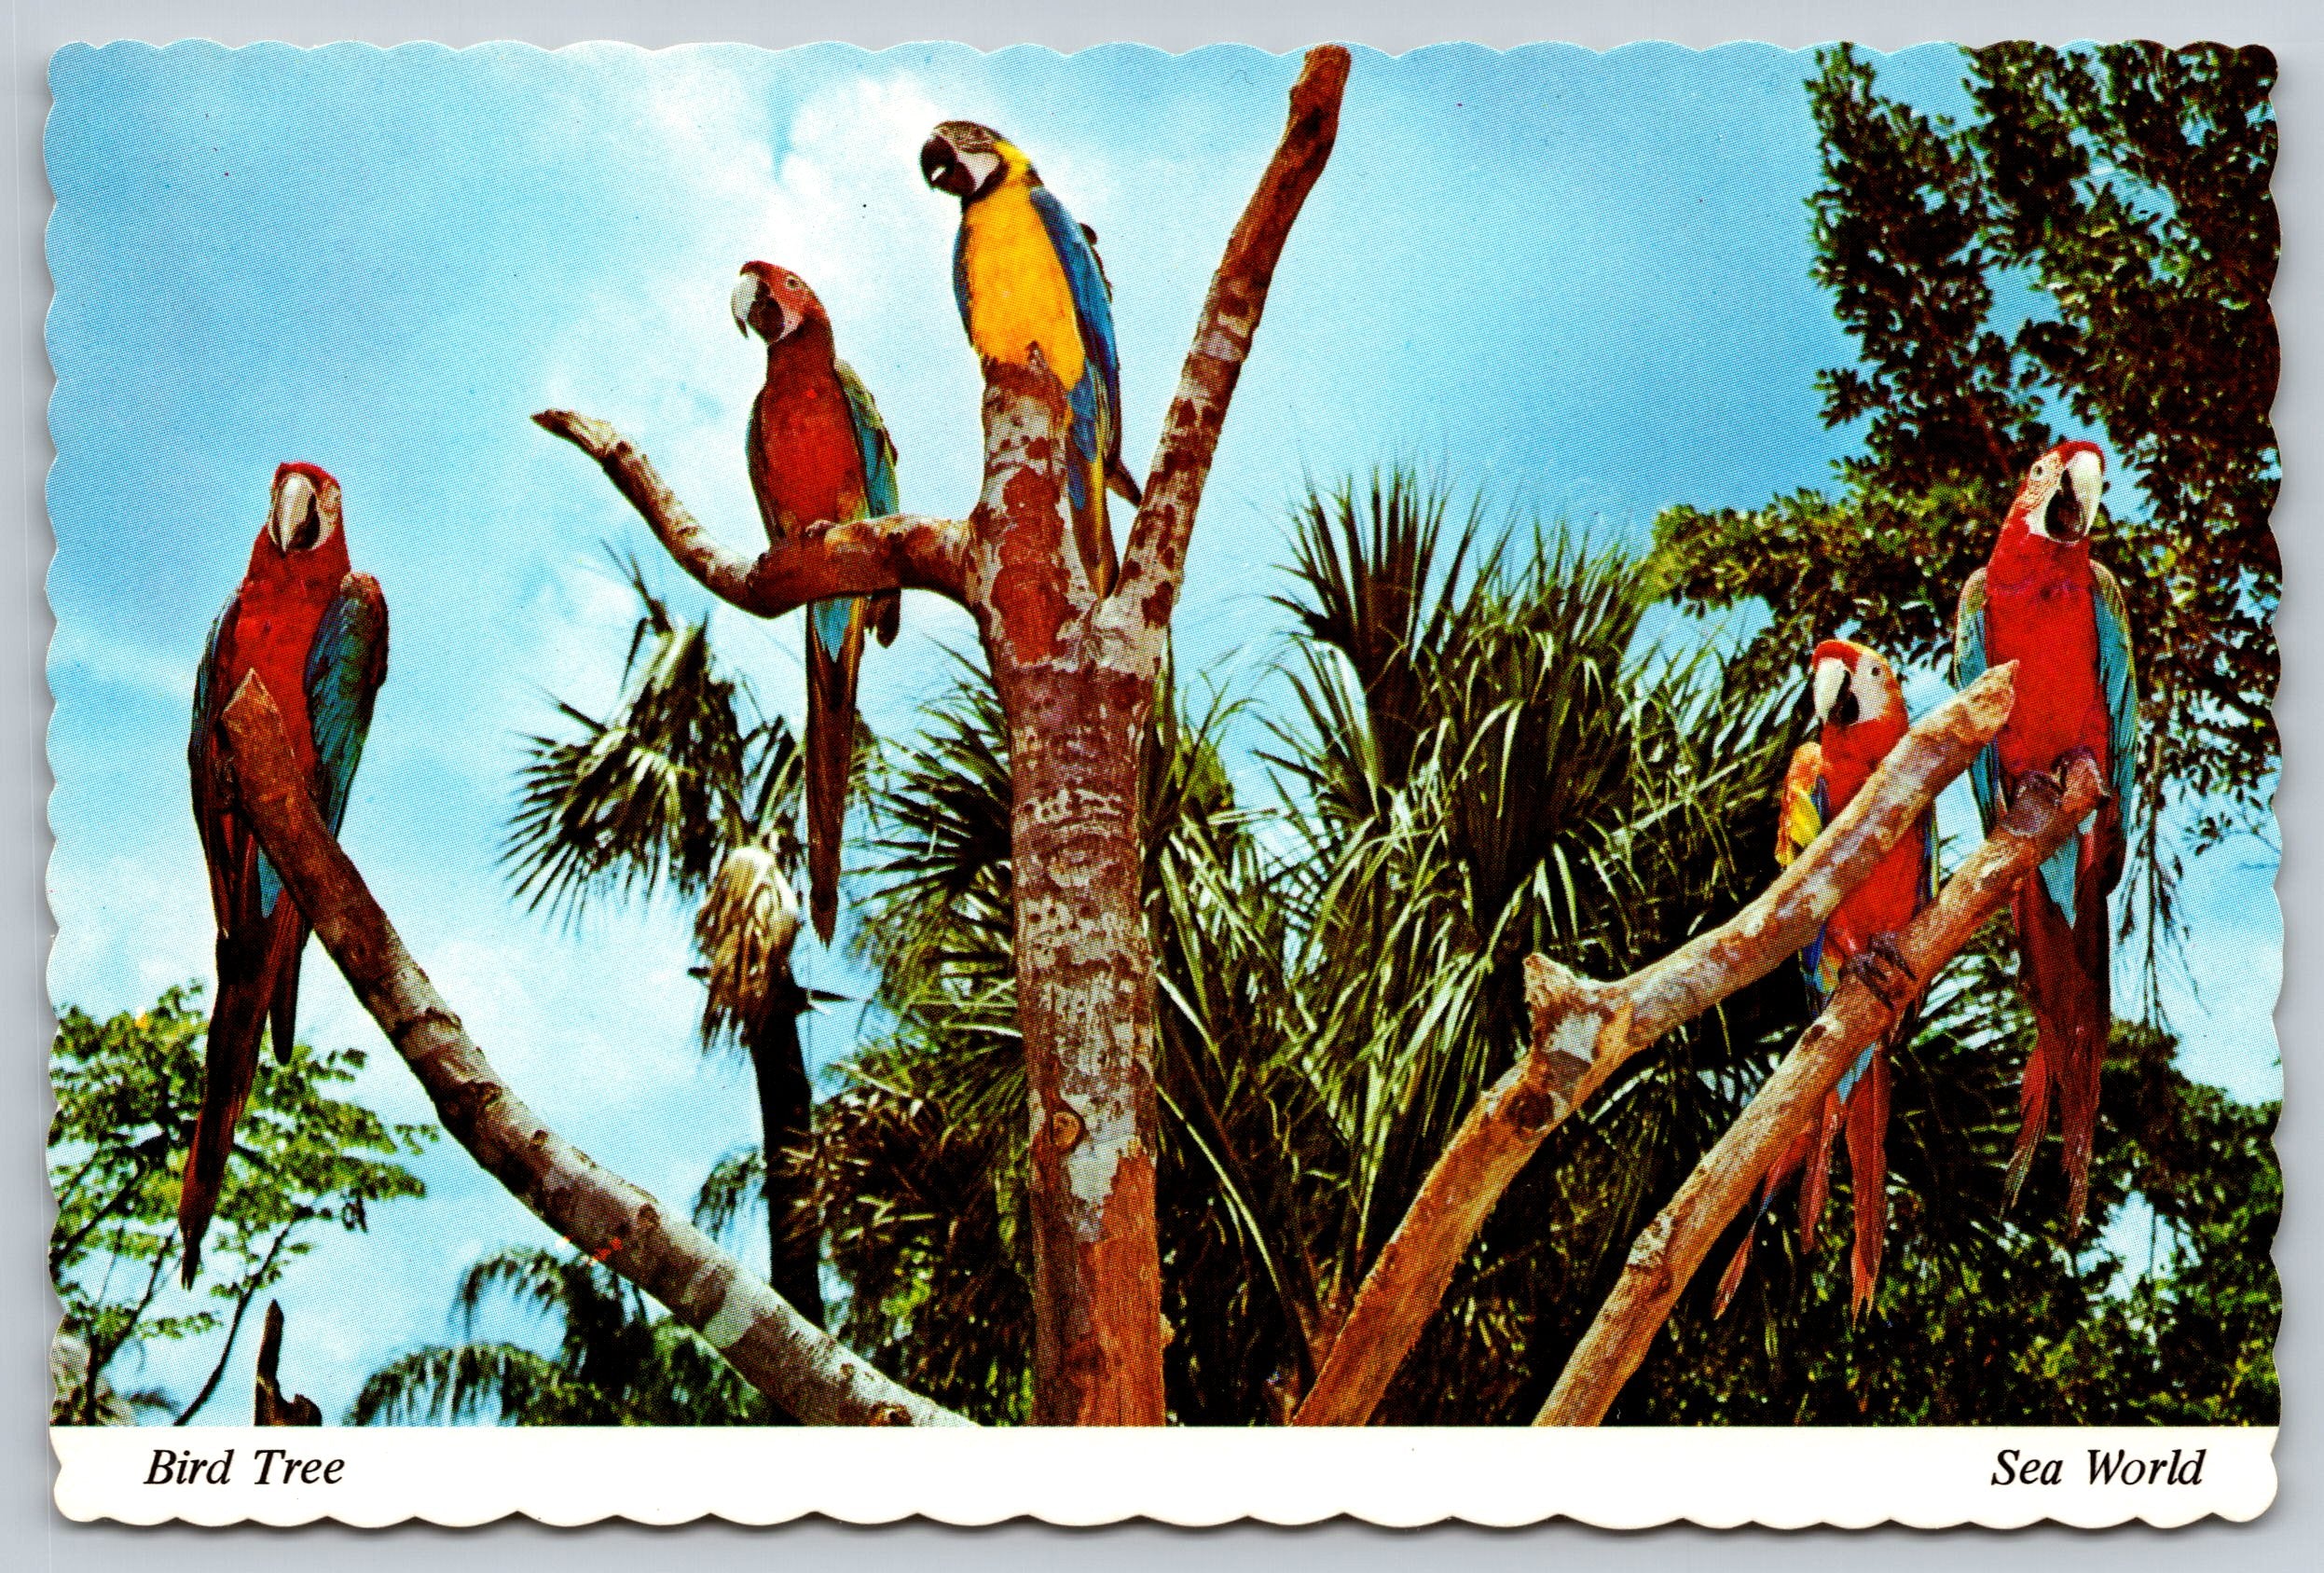 The Bird Tree, Sea World, Florida, Vintage Post Card